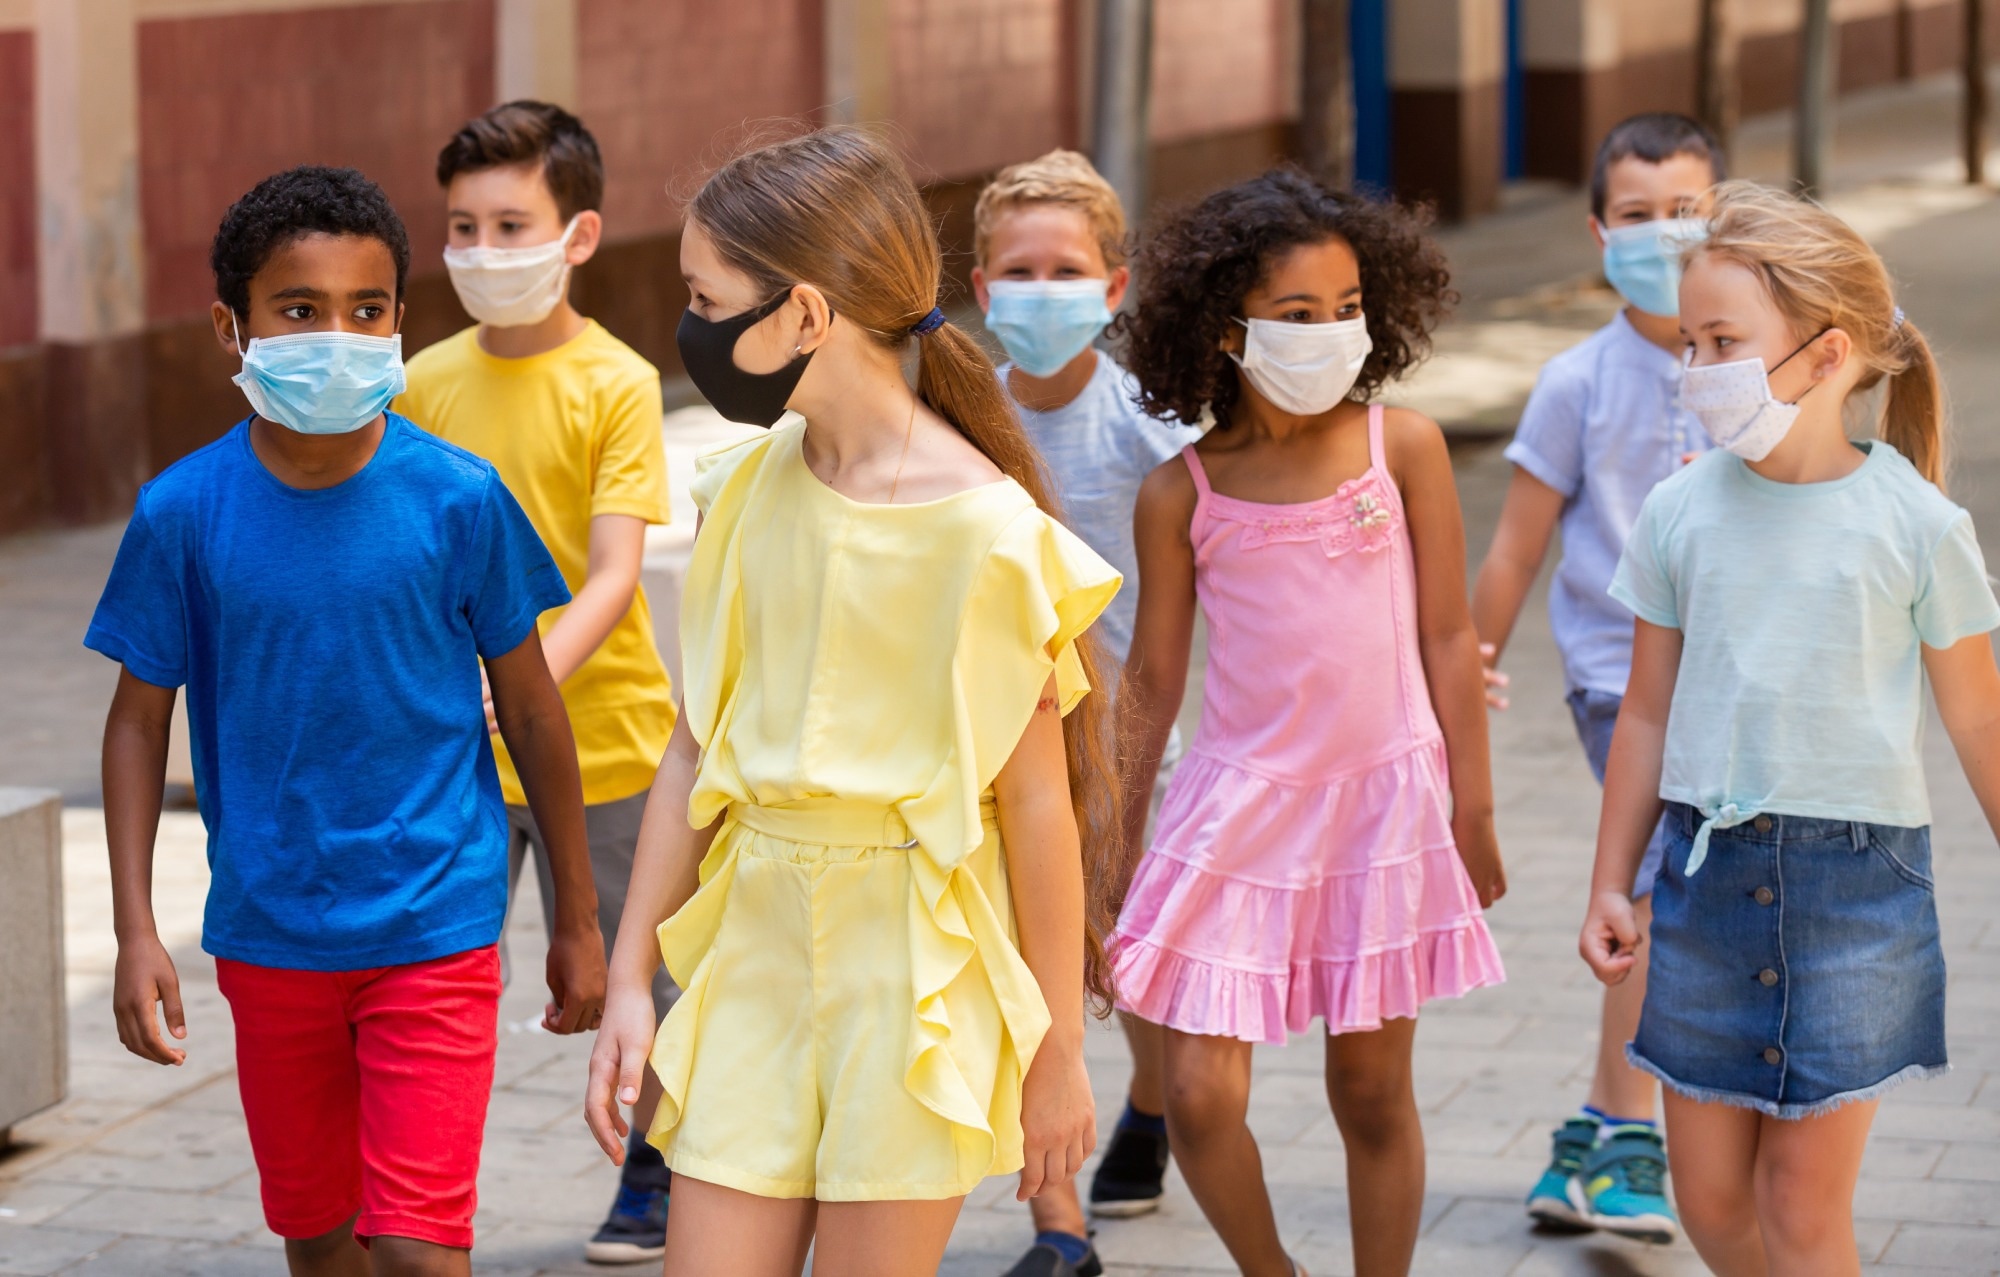 Study: Respiratory function in children wearing face masks. Image Credit: BearFotos/Shutterstock